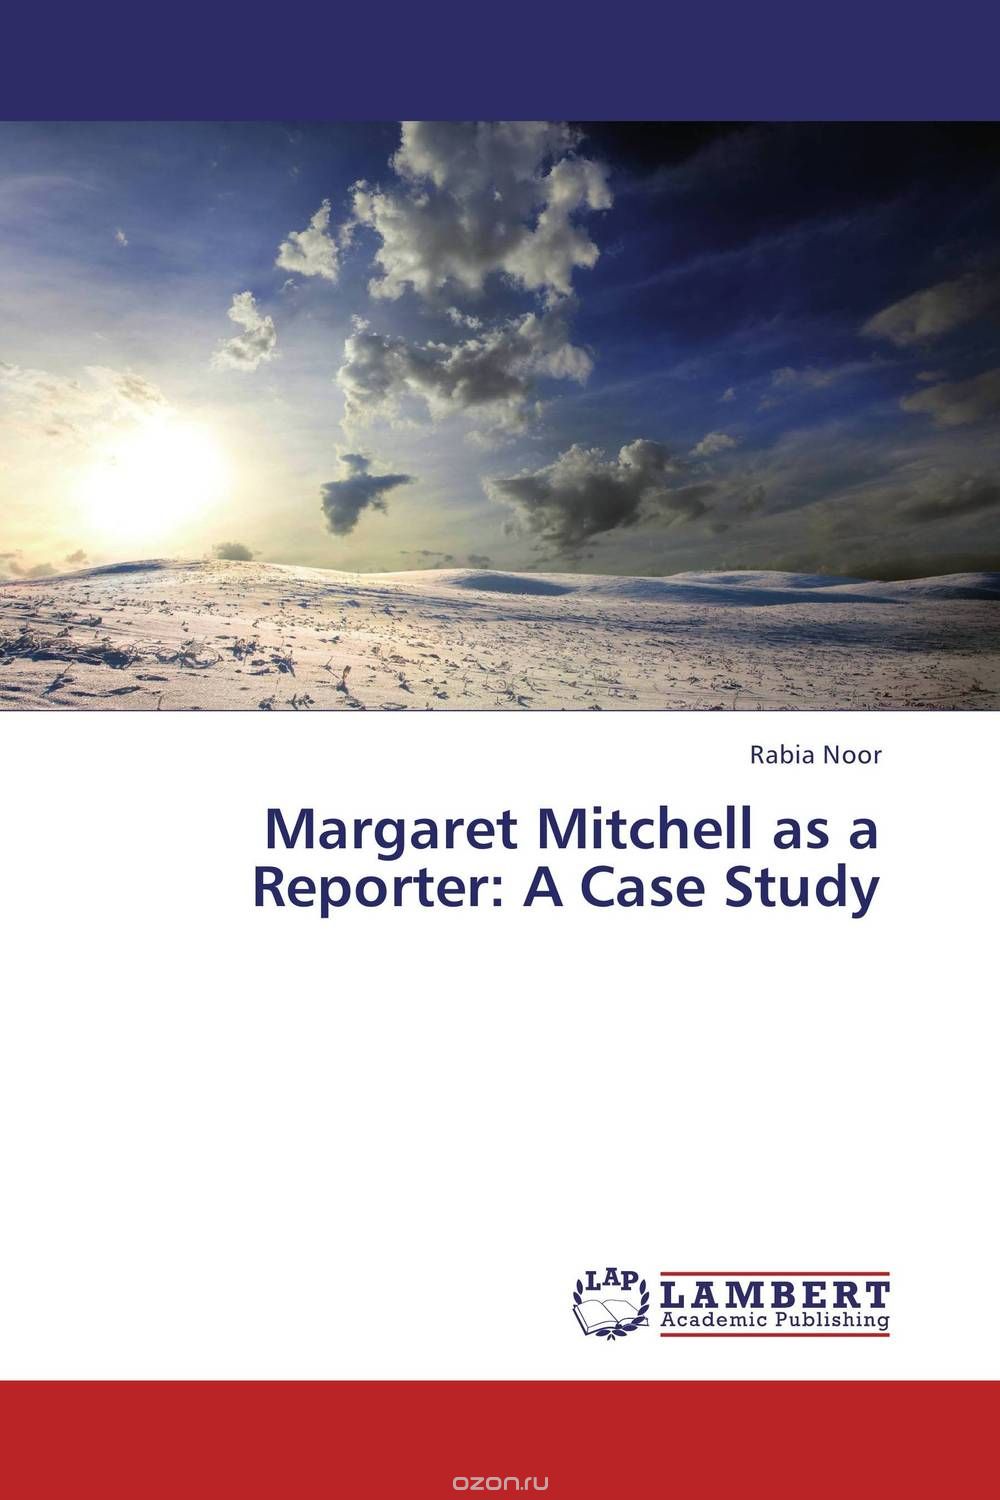 Скачать книгу "Margaret Mitchell as a Reporter: A Case Study"